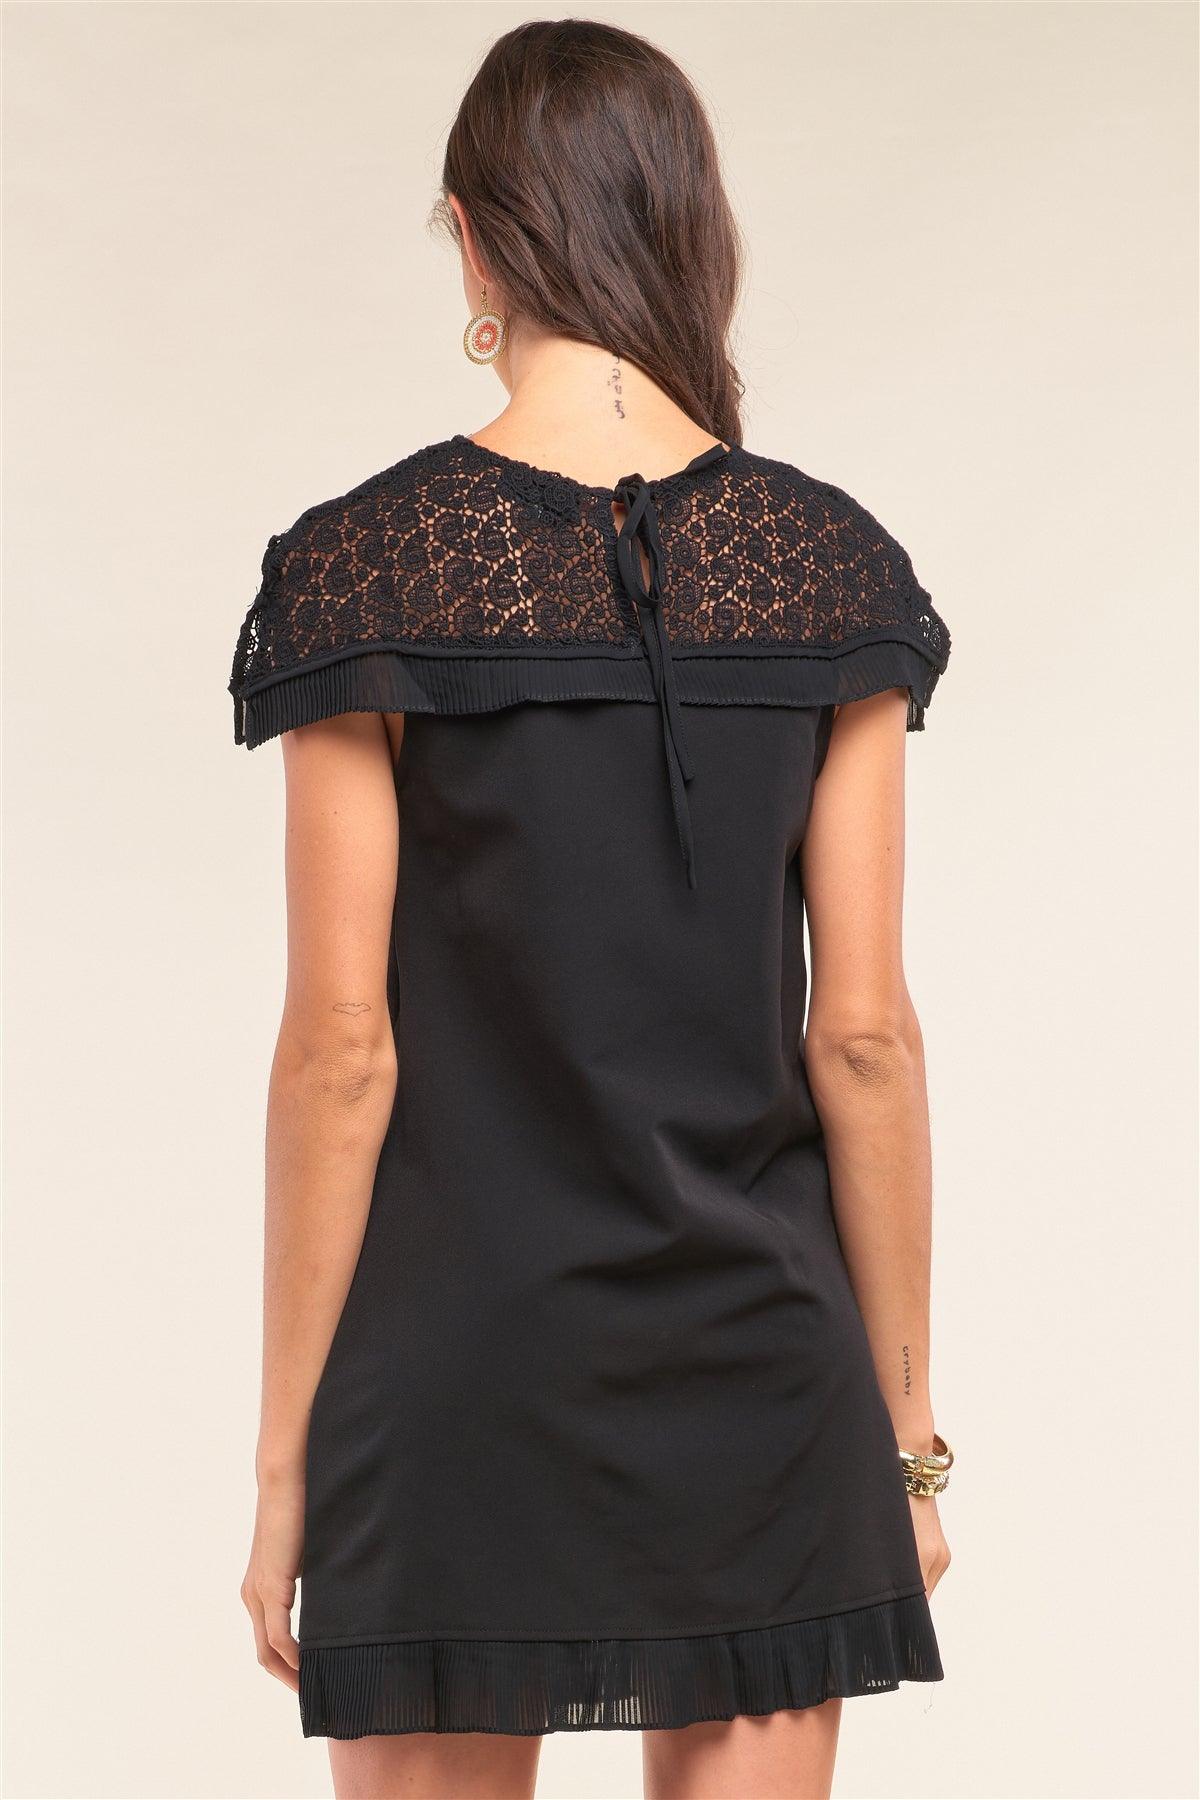 Black Crochet Lace Trim Self-Tie Crew Neck Pleated Hem Detail Relaxed Fit Mini Dress /1-3-2